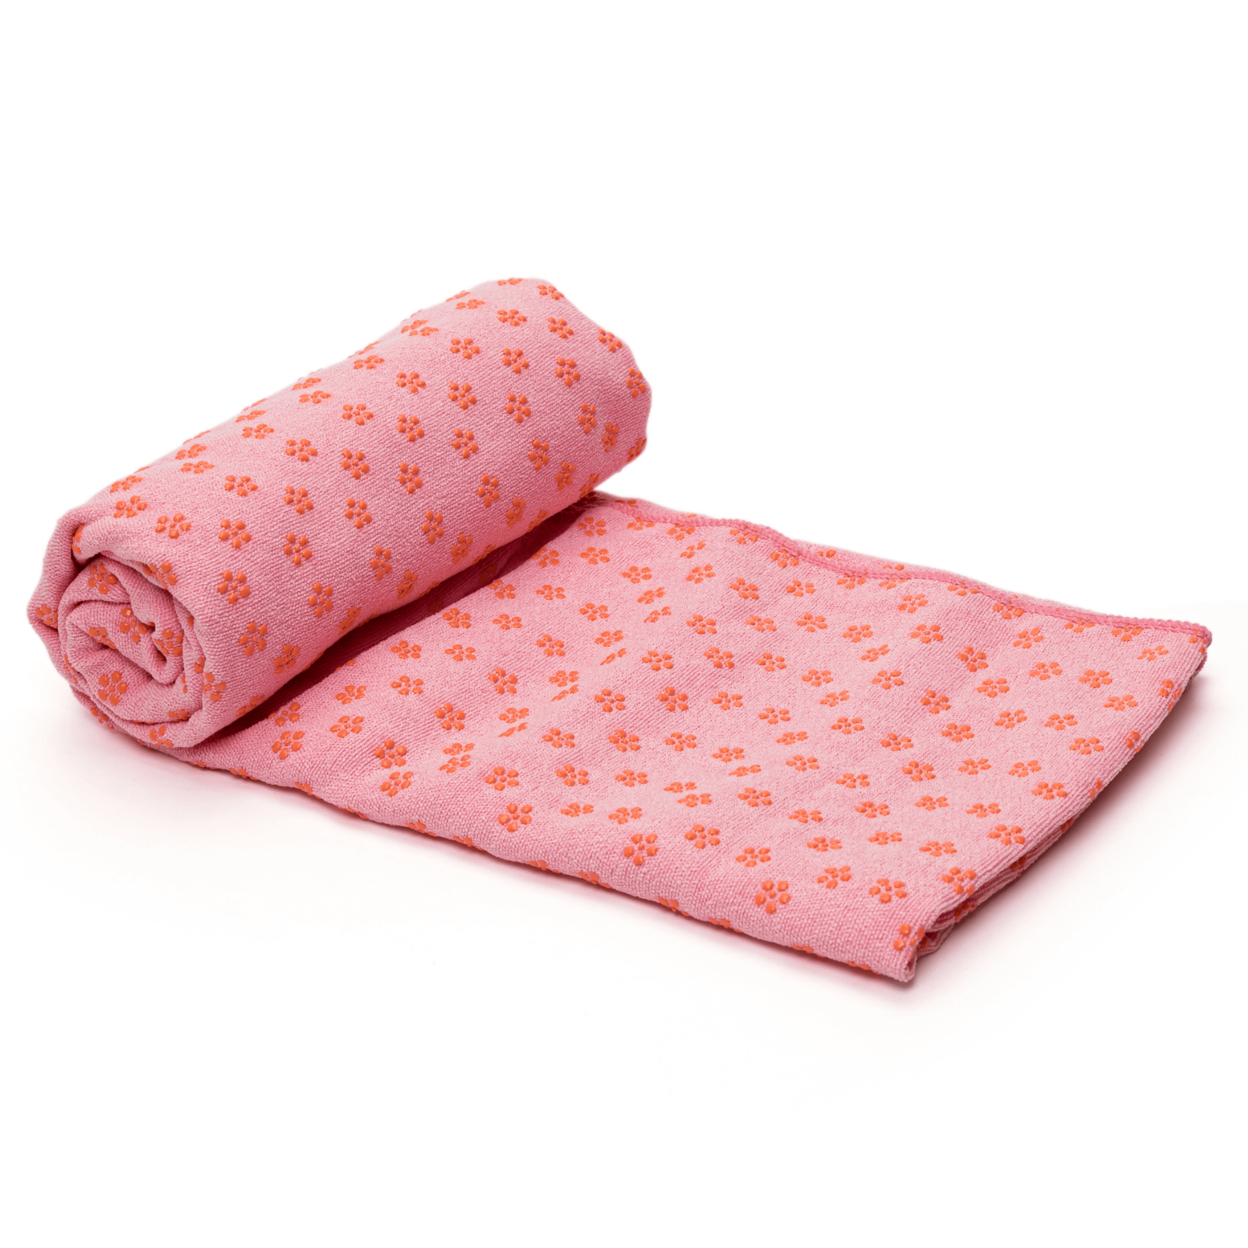 Premium Absorption Hot Yoga Mat Towel With Slip-Resistant Grip Dots - Dark Purple